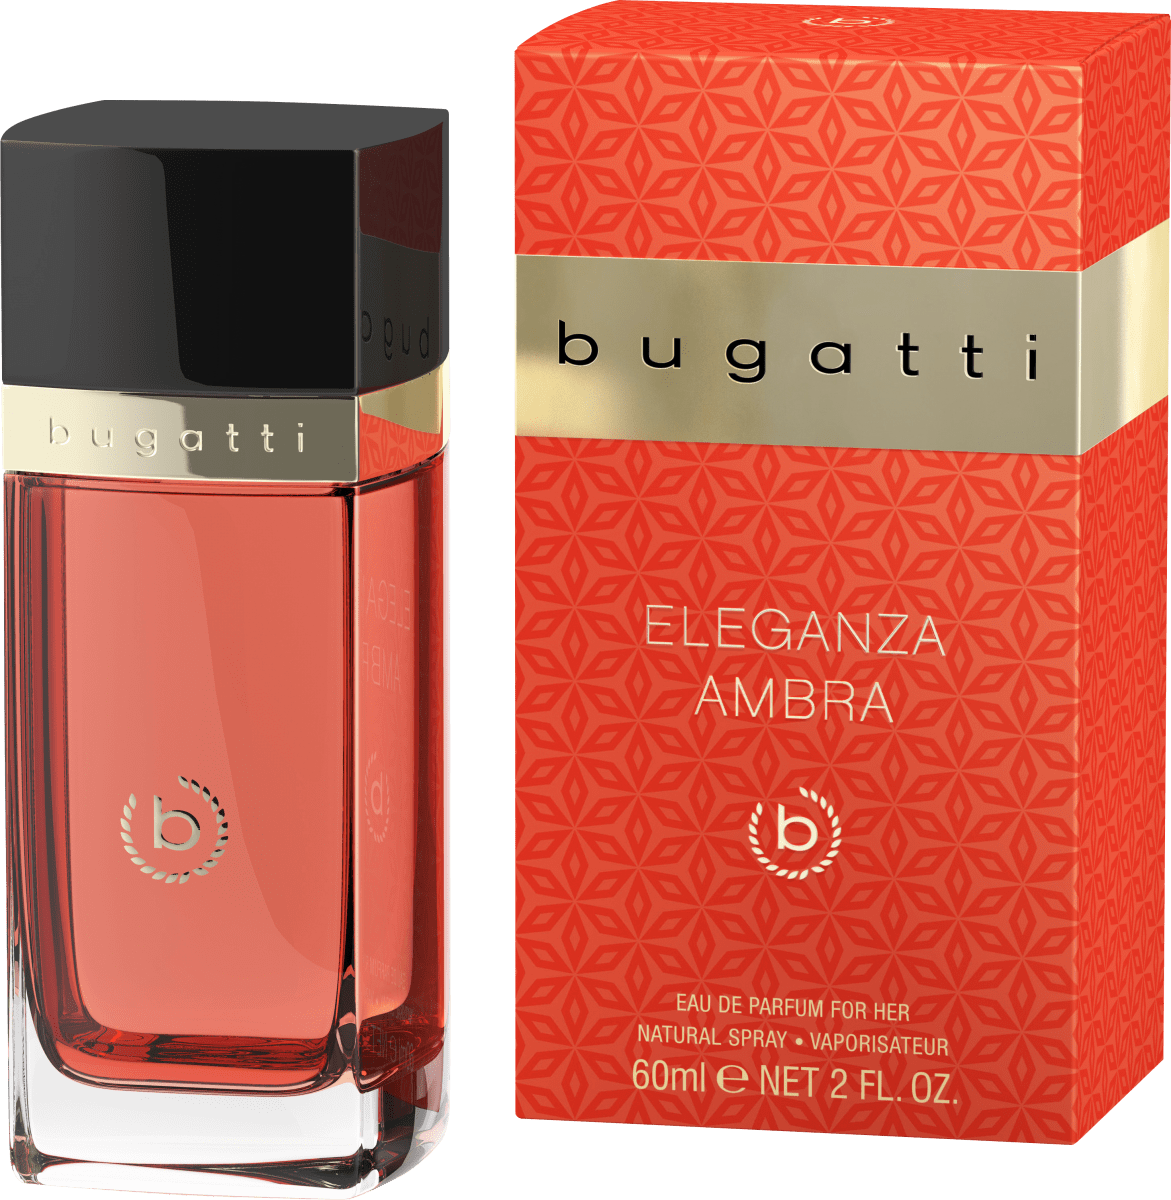 bugatti Eleganza Ambra Eau de Parfum, 60 ml